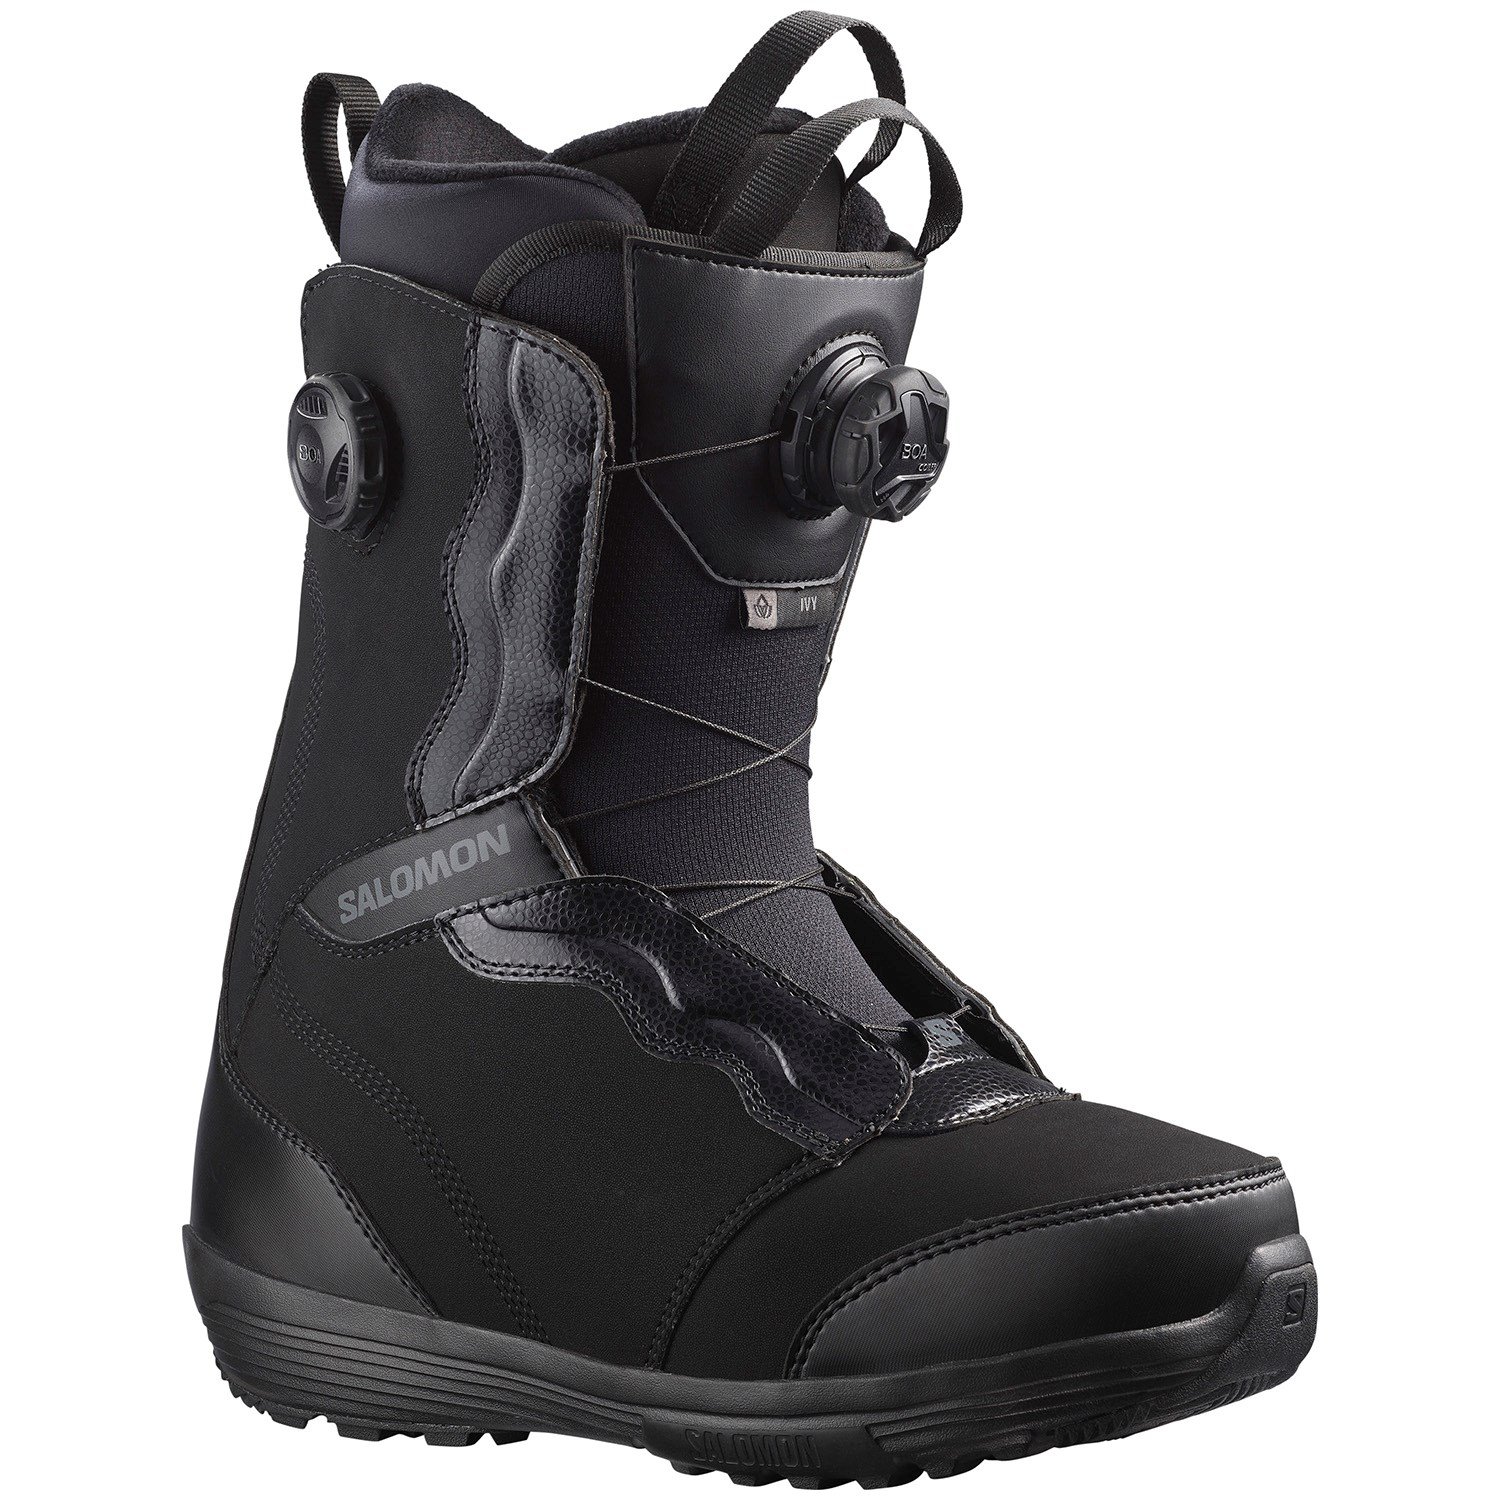 Ботинки для сноубординга Salomon Ivy Boa SJ, черный ботинки для сноубординга salomon faction boa серый